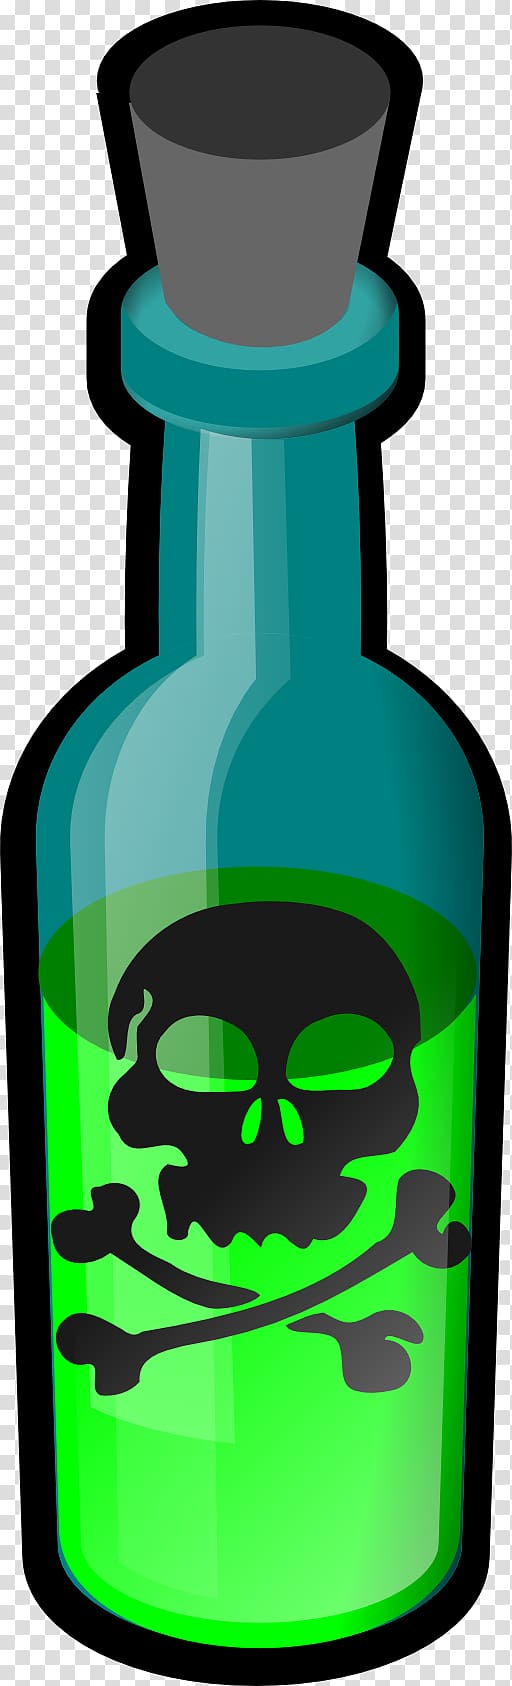 poison bottle illustration, Skull and crossbones Poison Human skull symbolism , Poisonous Potion transparent background PNG clipart